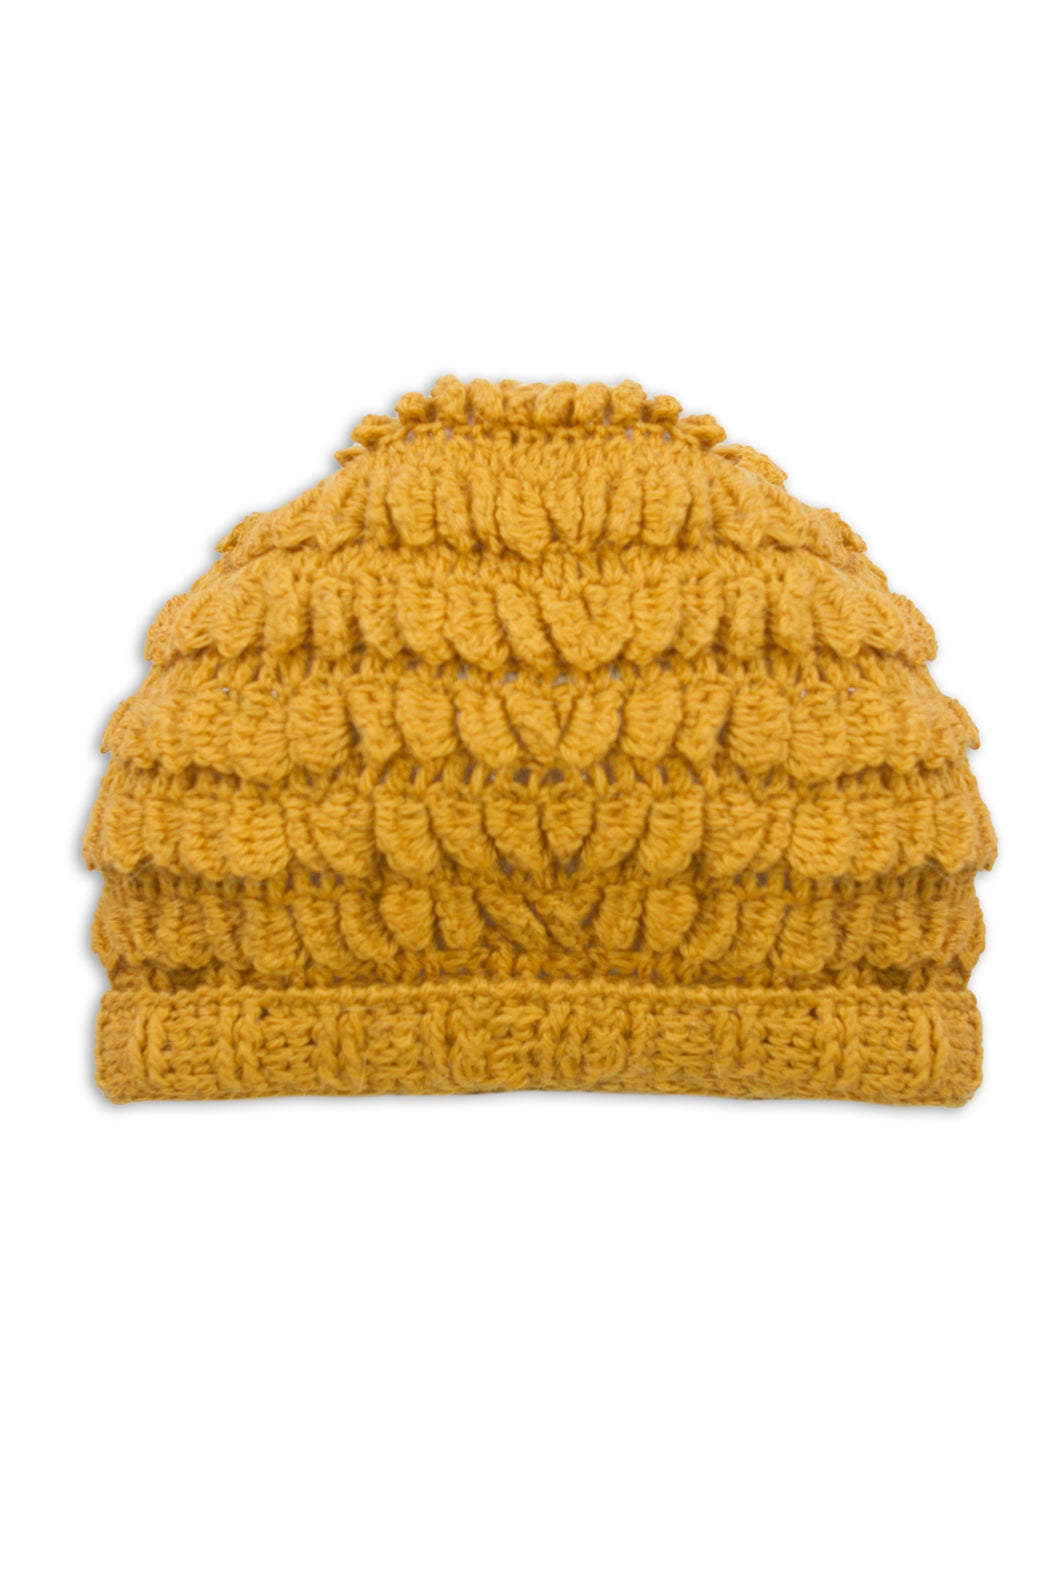 Pepina Alpaca Crochet Yellow Hat 001